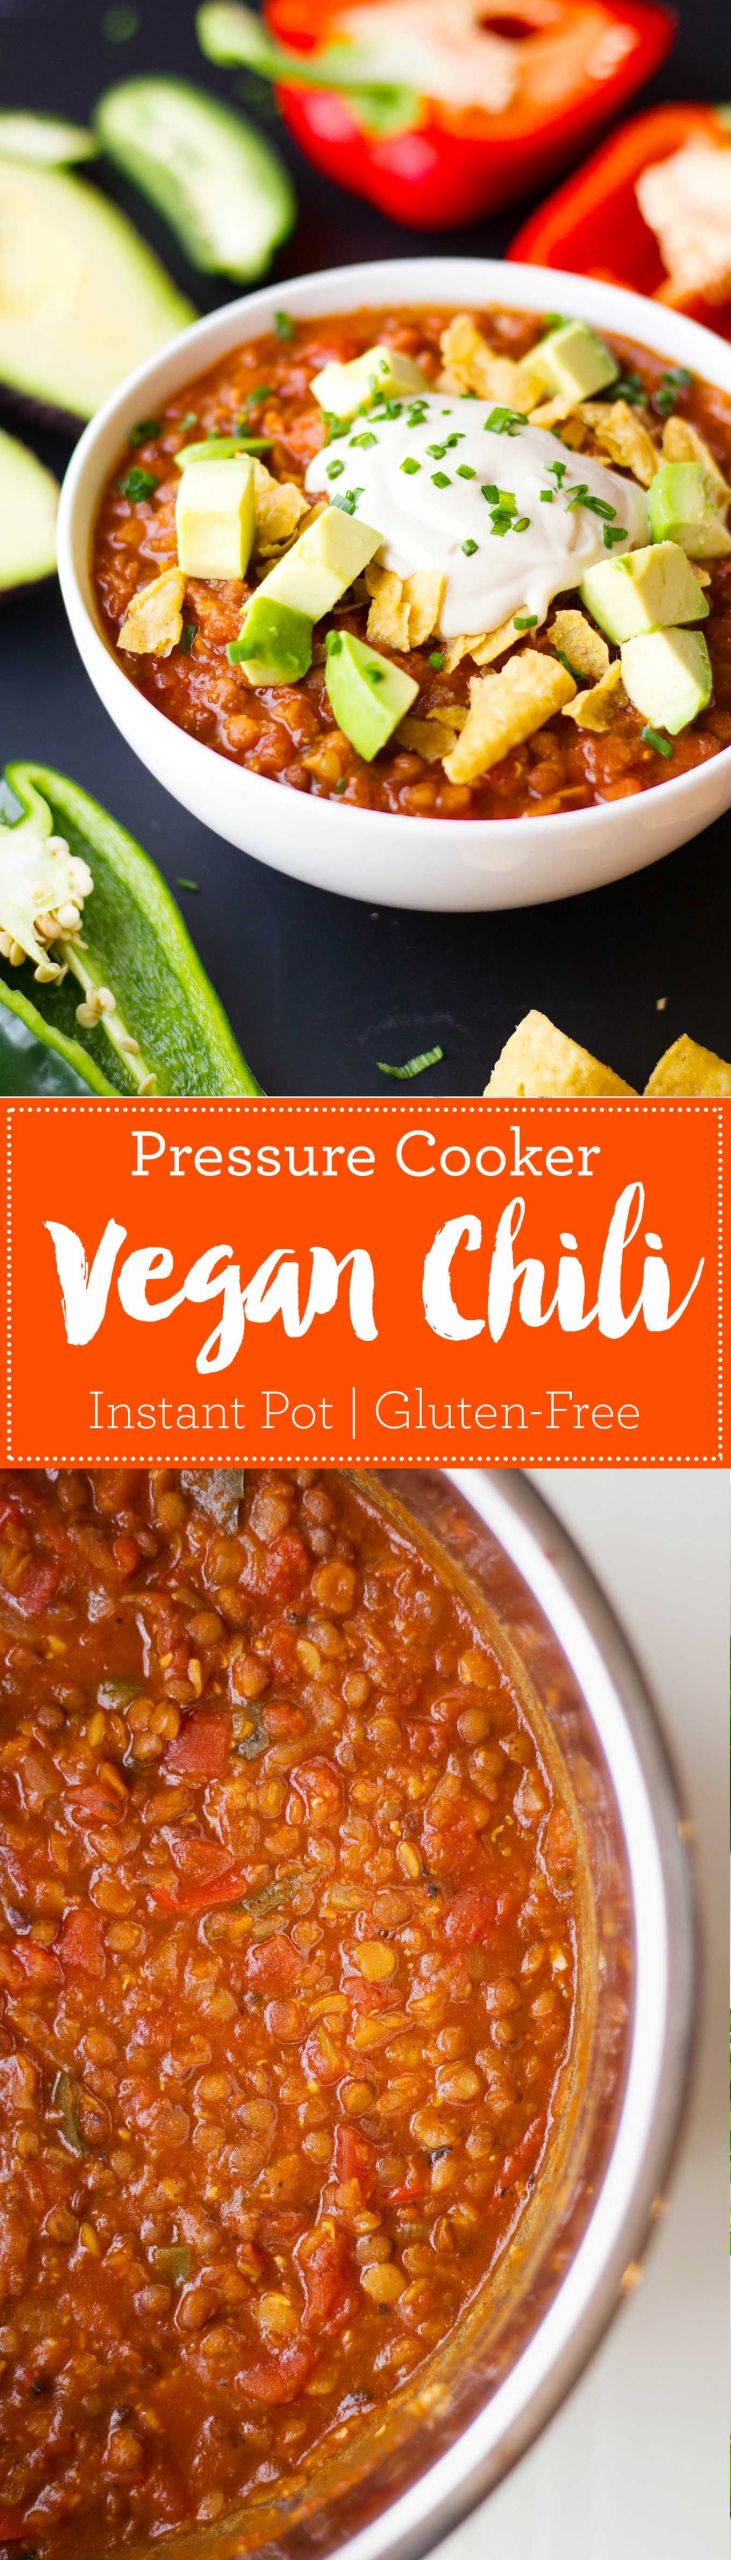 Pressure Cooker Vegetarian Chili
 Pressure Cooker Vegan Chili